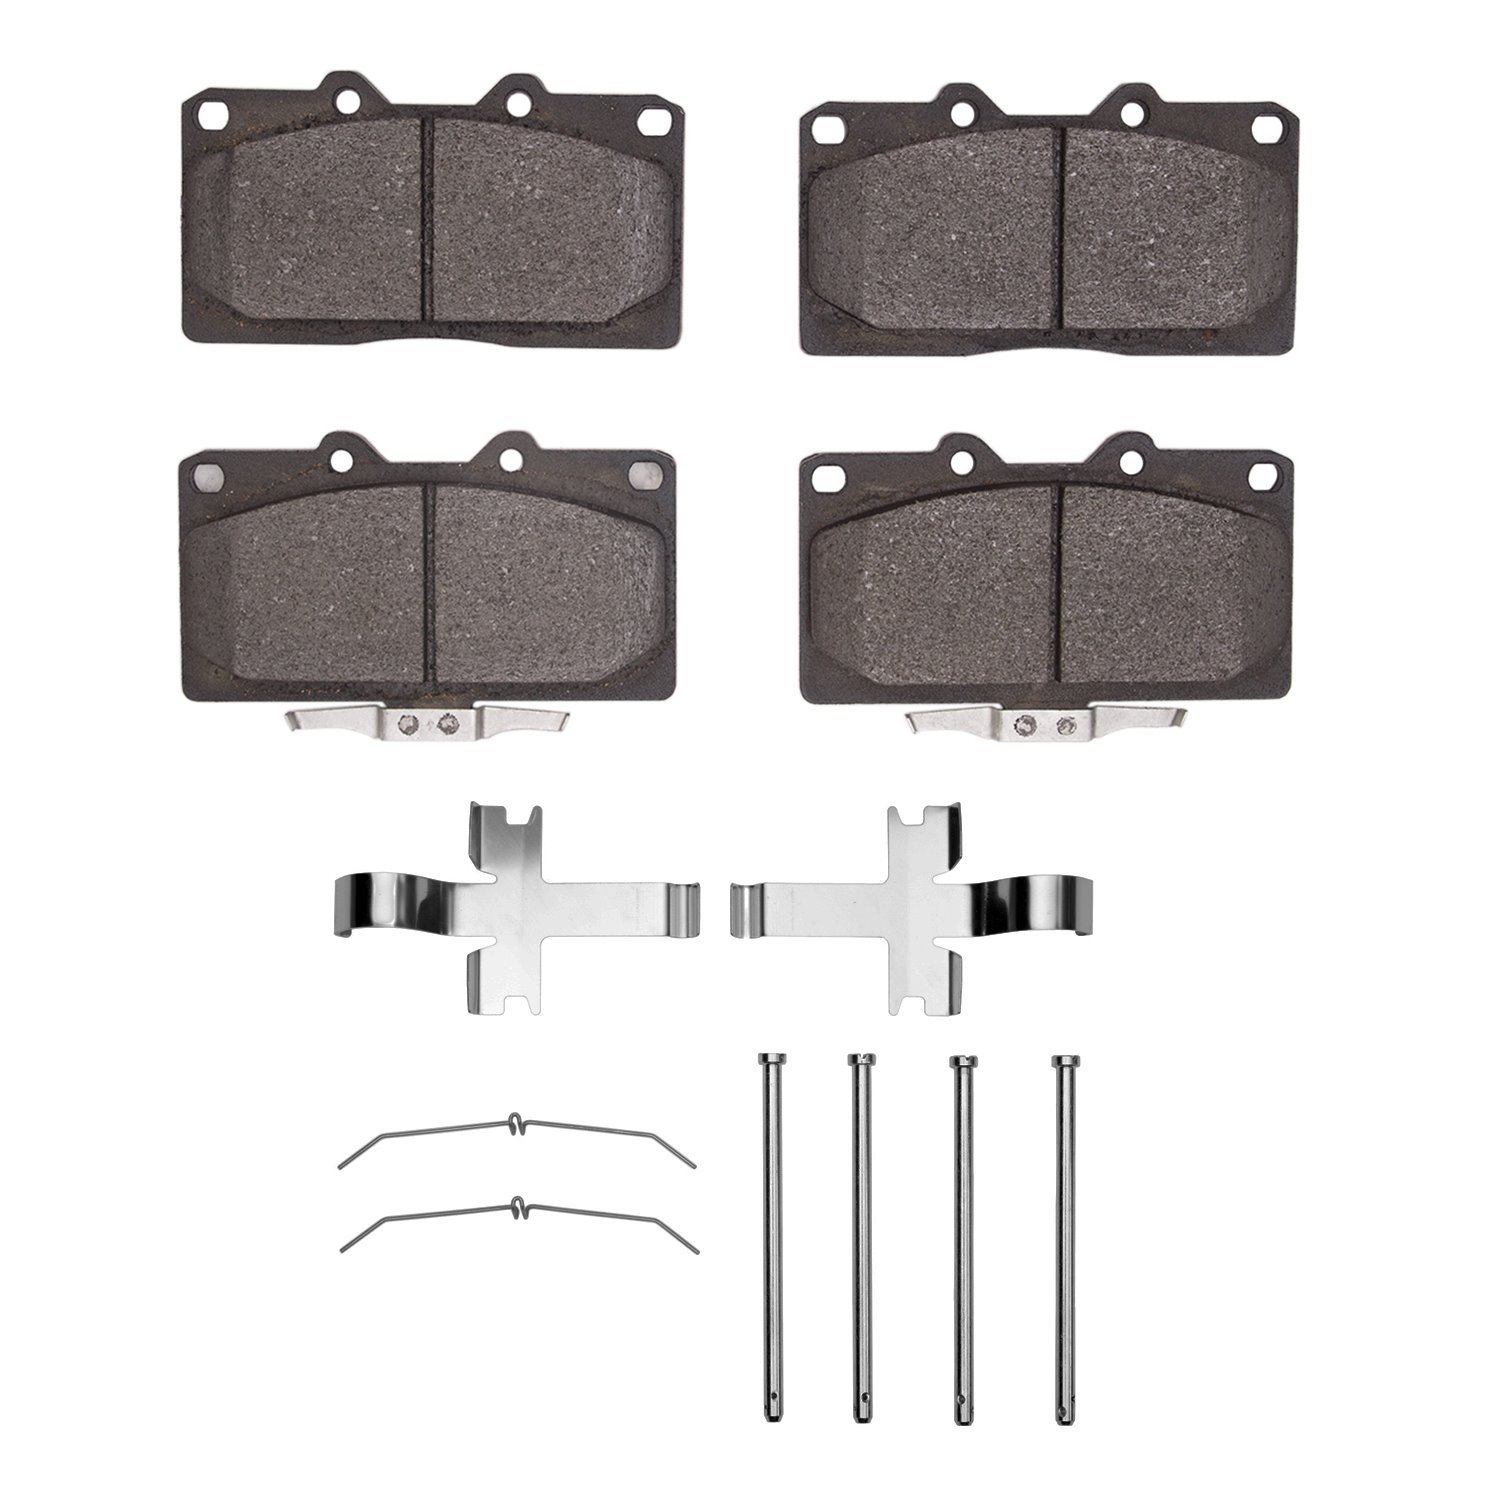 1310-0531-01 3000-Series Ceramic Brake Pads & Hardware Kit, 1991-1999 Multiple Makes/Models, Position: Front